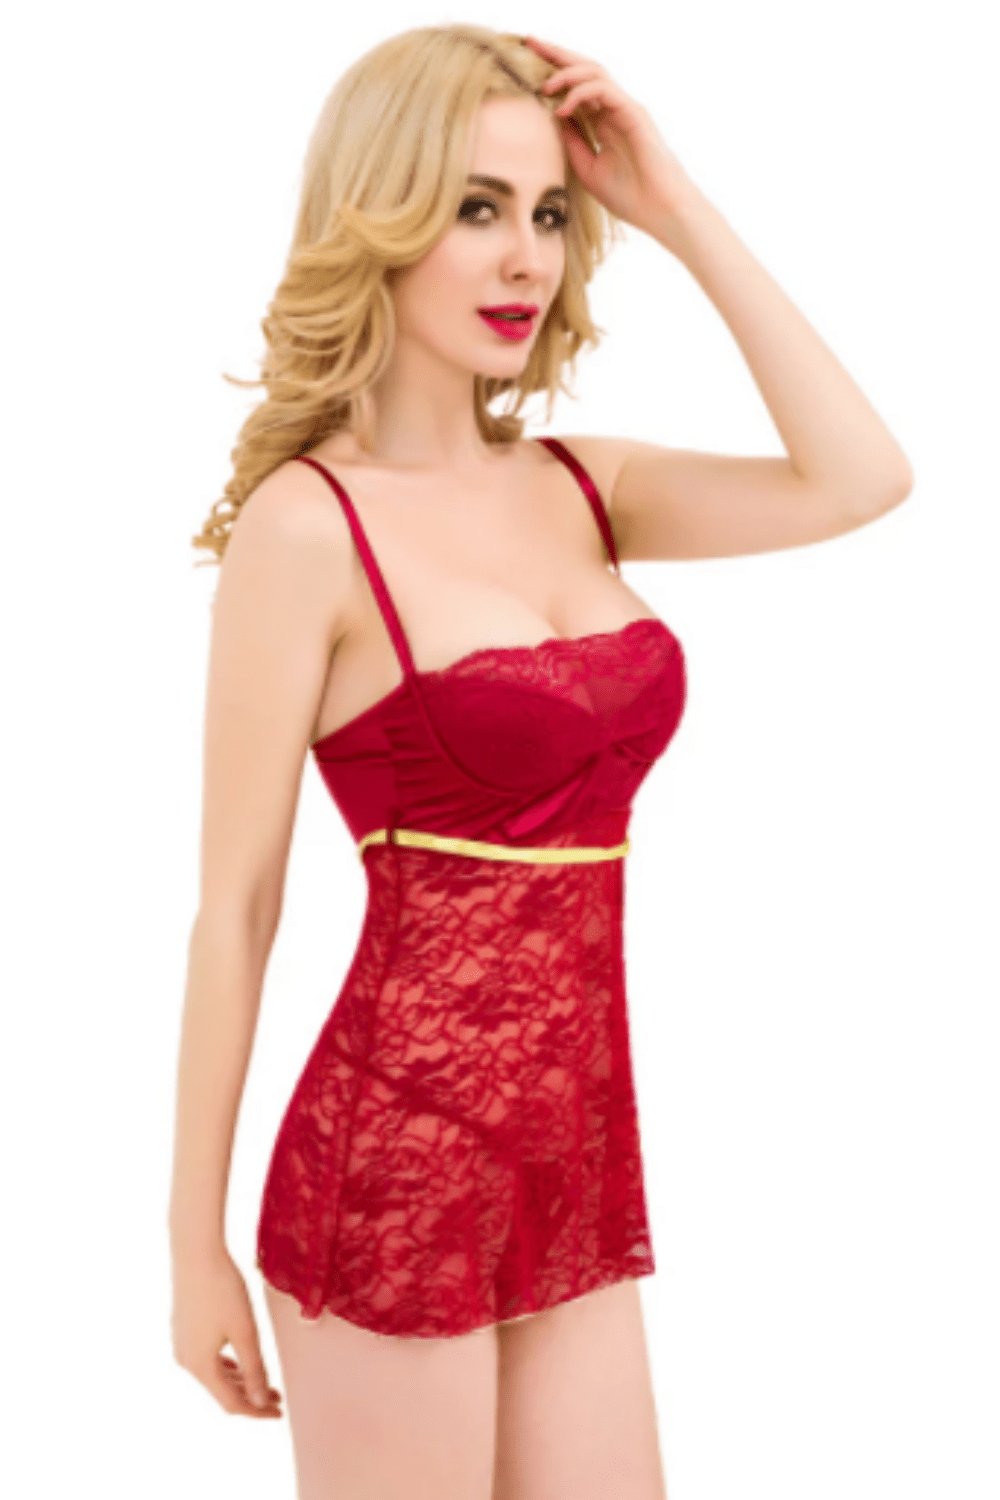 Plus Size Babydoll Sleepwear Lingerie - Red - TGC Boutique